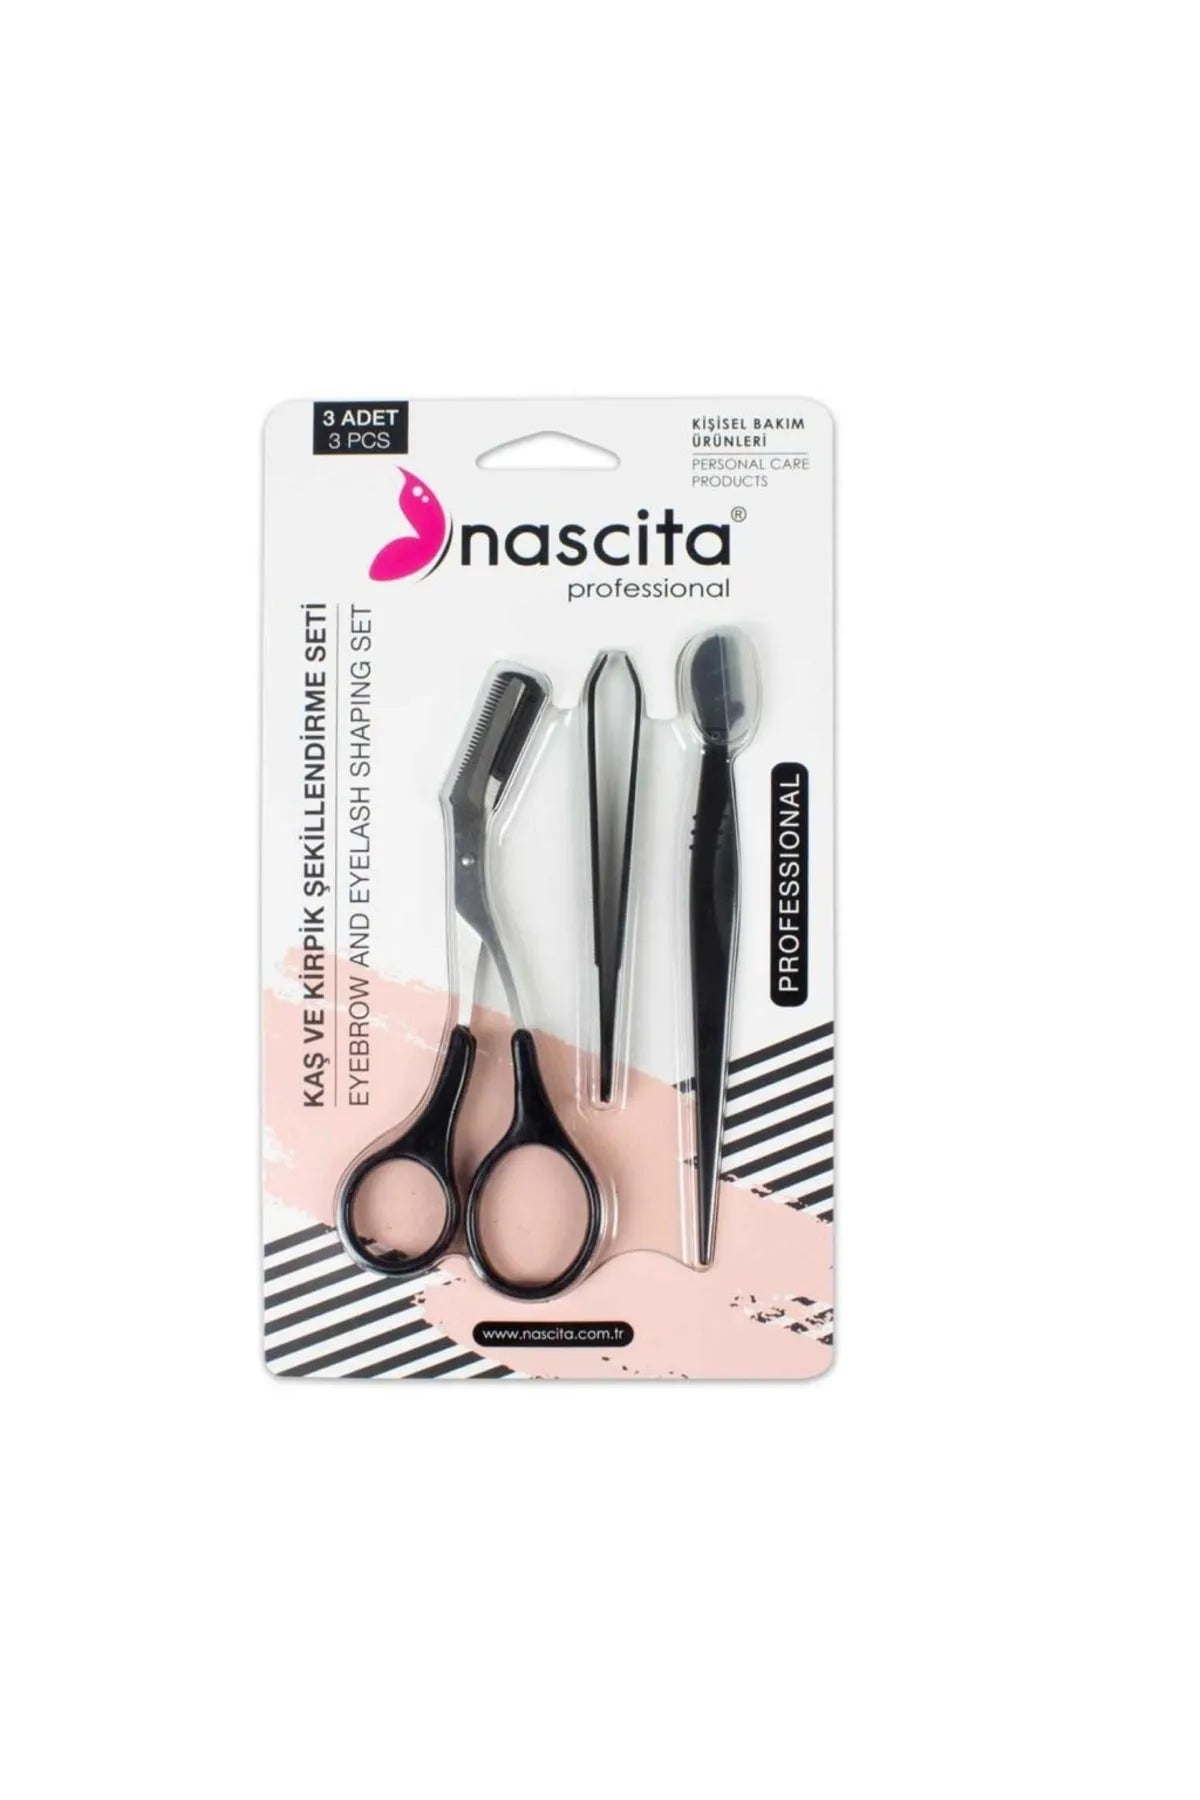 NascitaFace Care Set: Precision Scissors, Tweezers, and Razor for Effortless Beauty